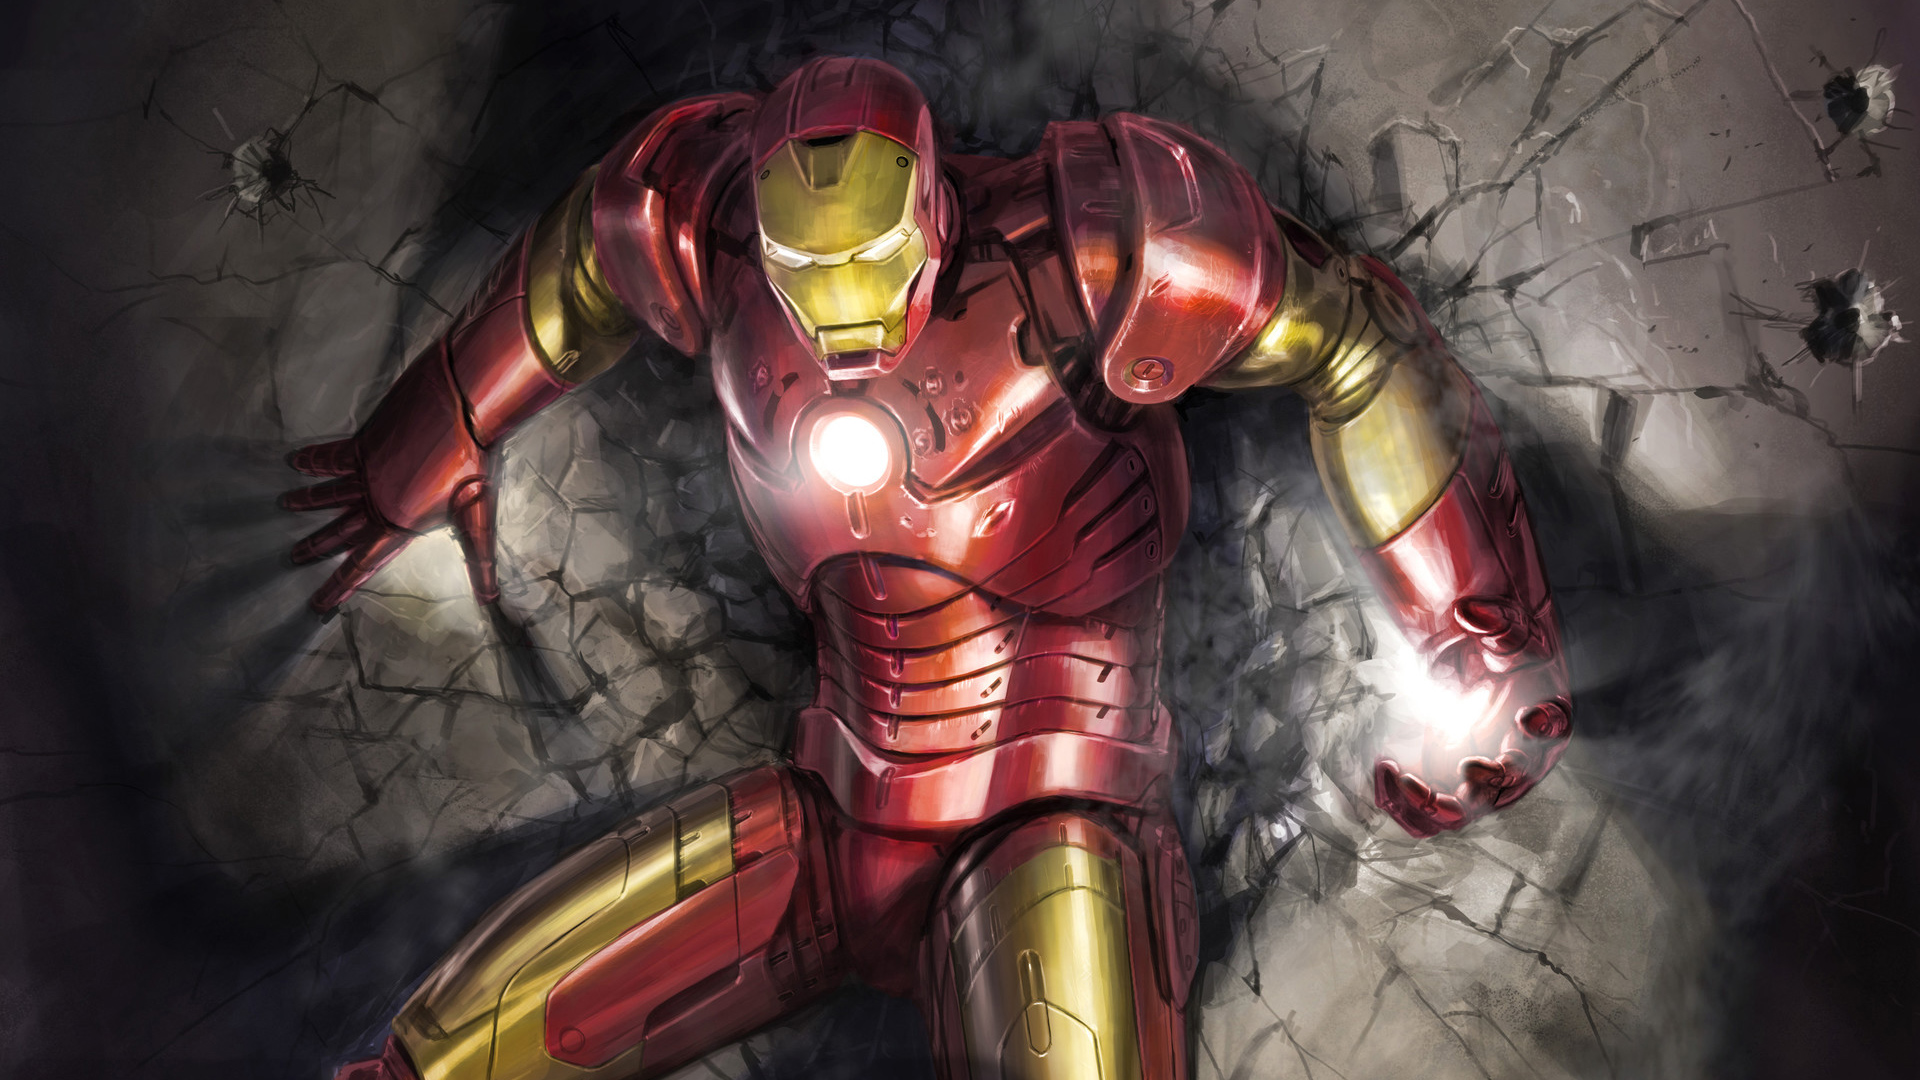 Wallpapers Iron Man movies rendering on the desktop